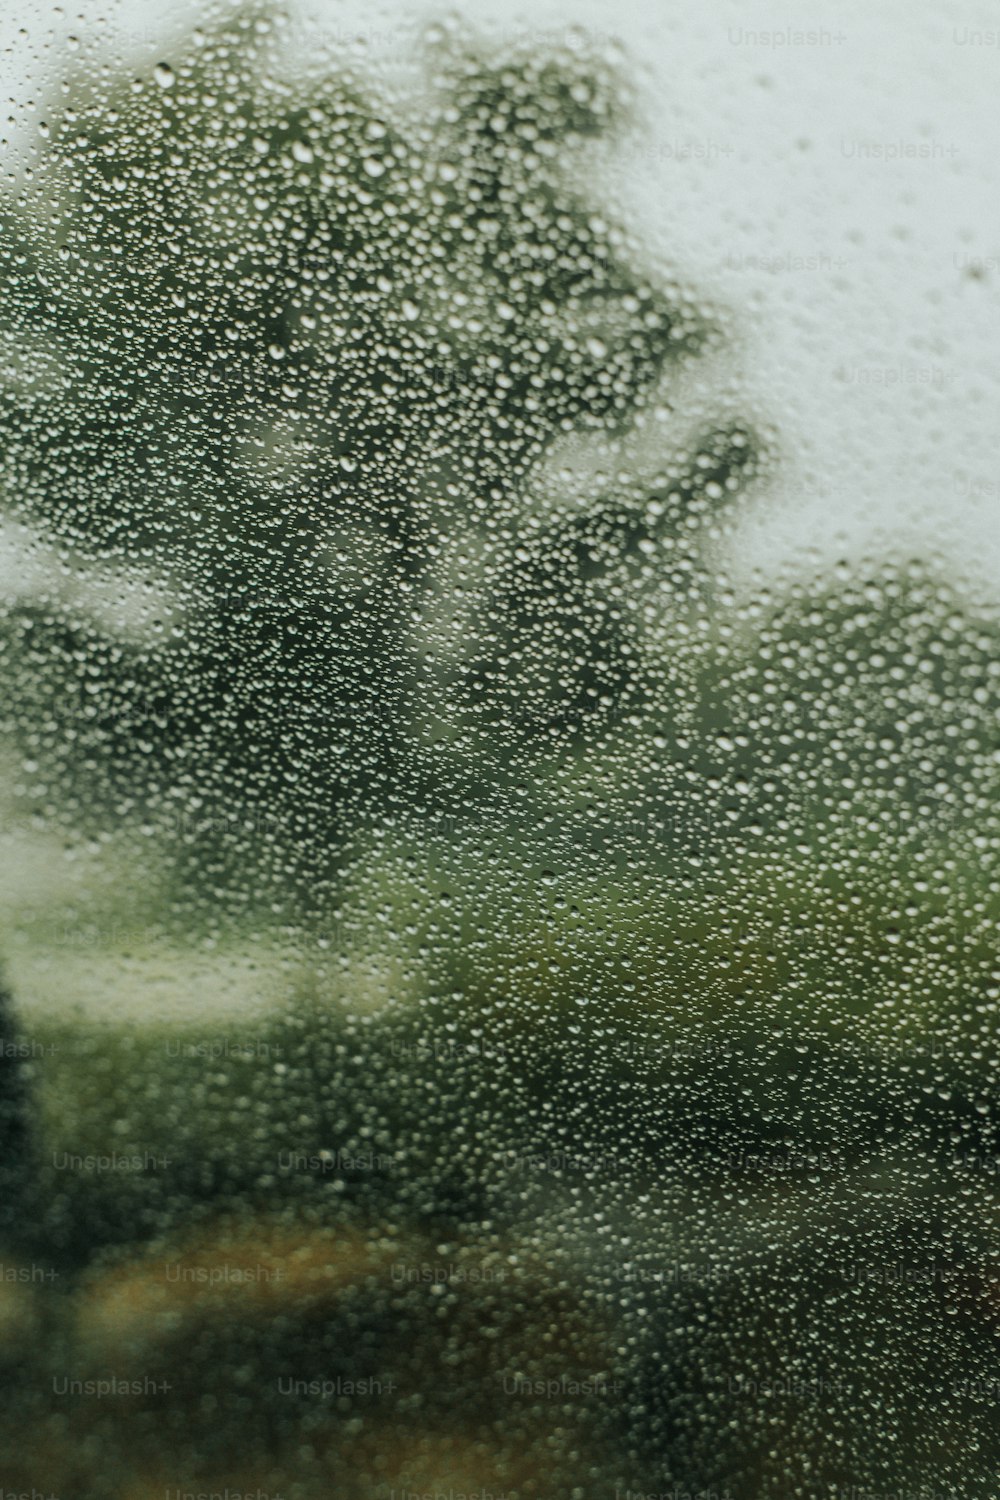 Una vista de un árbol a través de una ventana cubierta de lluvia